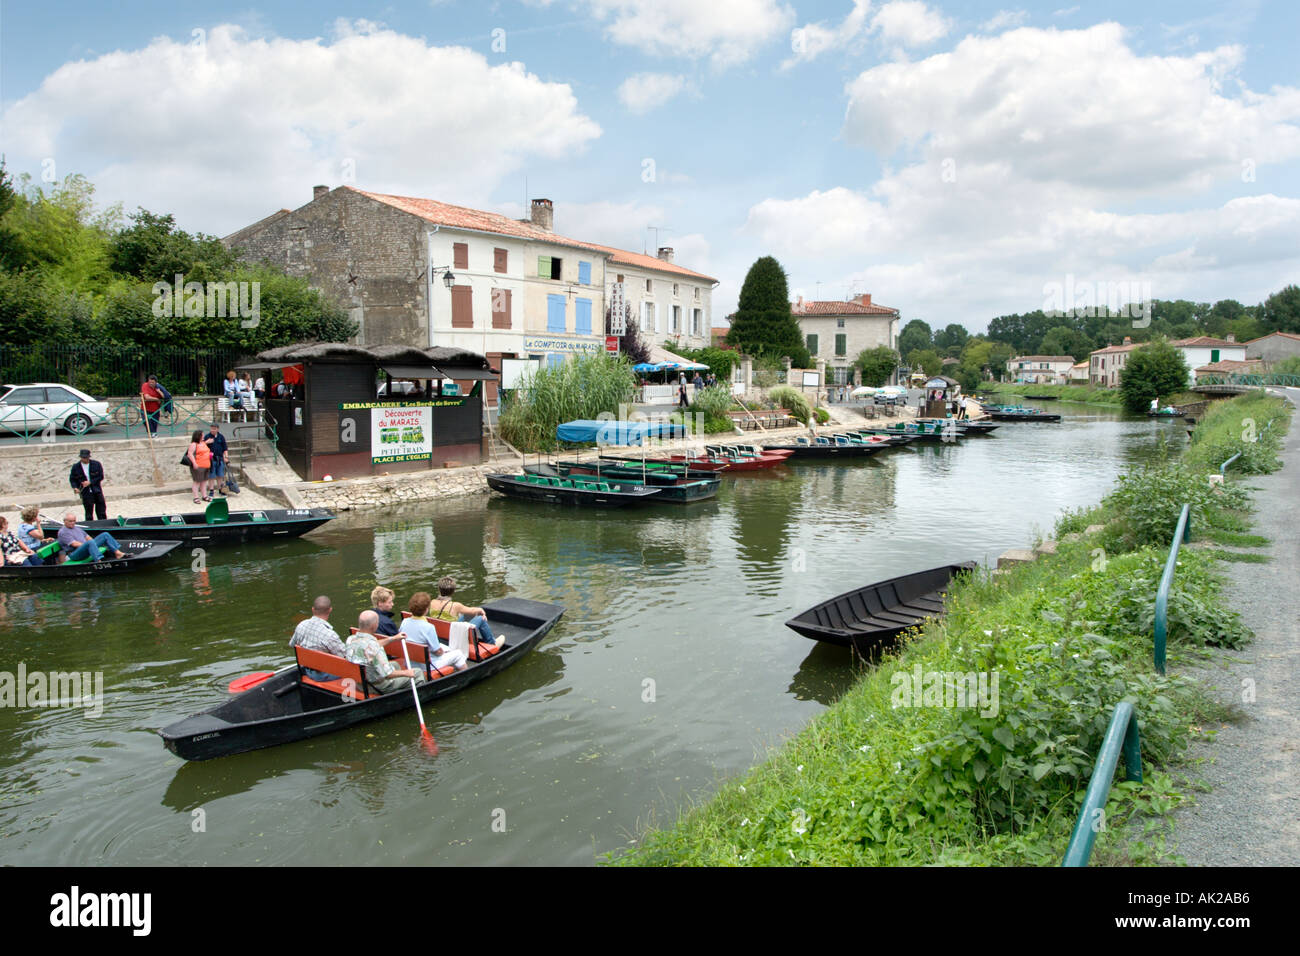 Boating on the River Sevre, Coulon, Marais Poitevin, Poitou Charentes, France Stock Photo